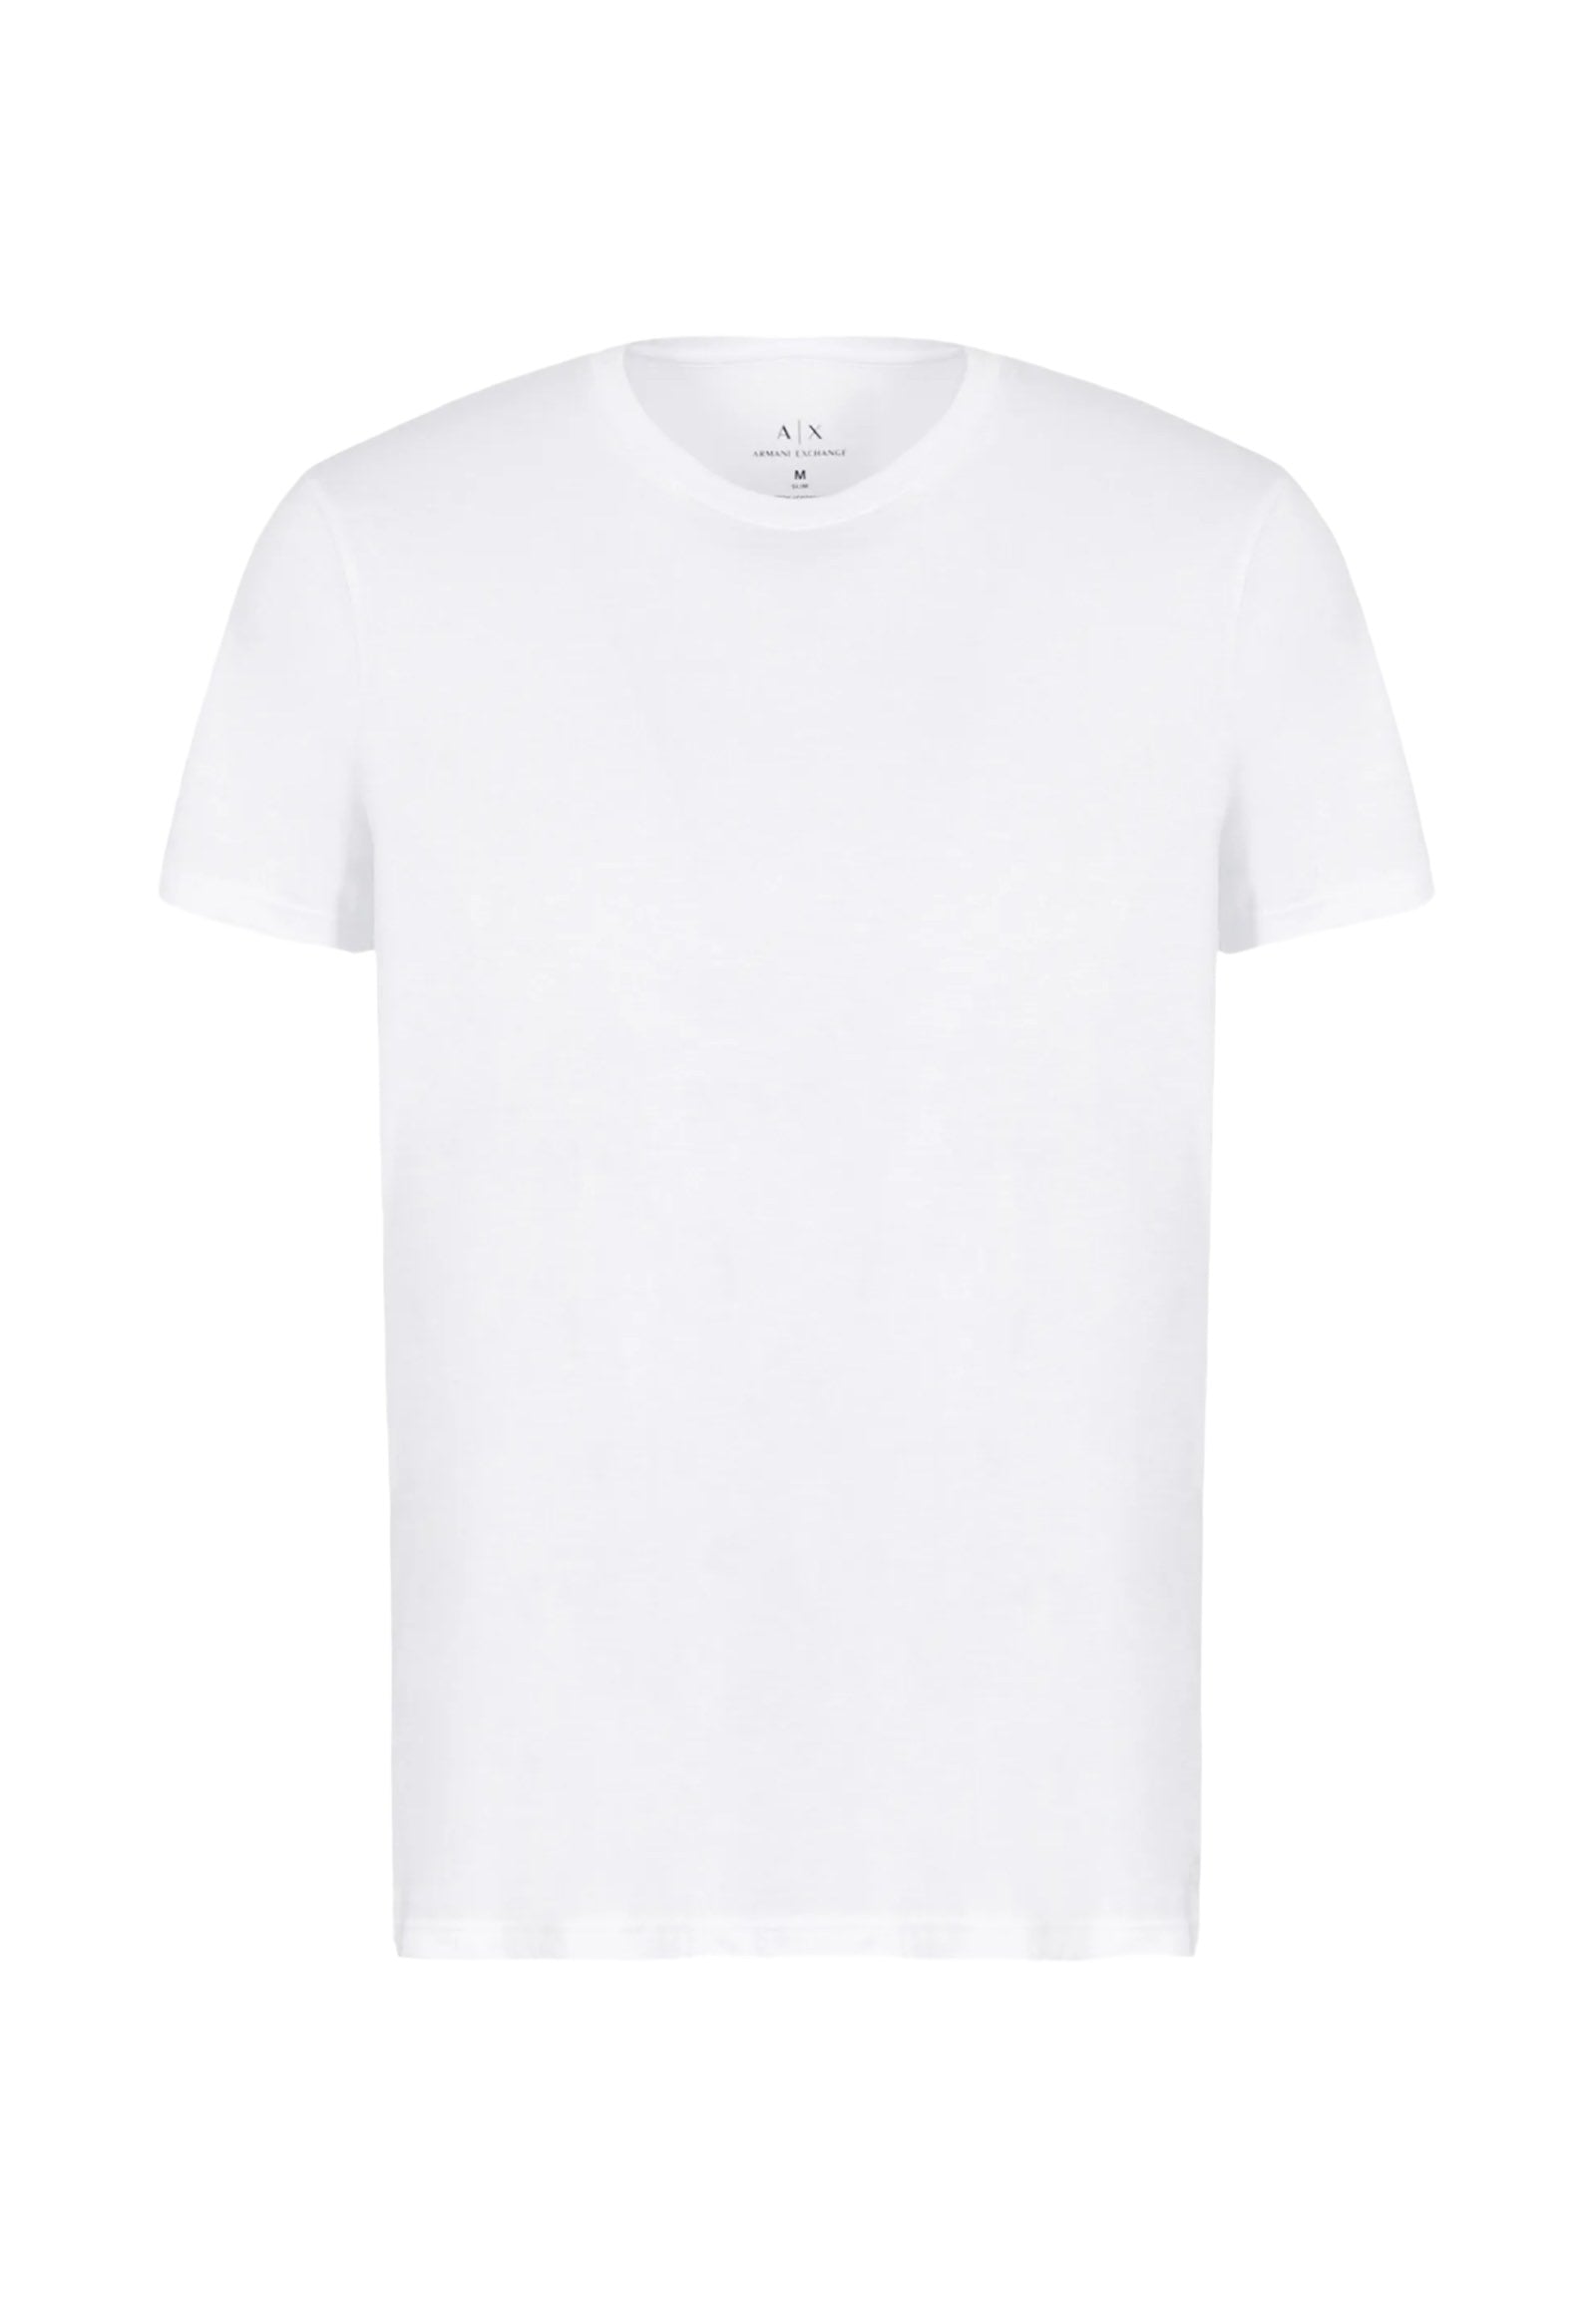 Armani Exchange T-Shirt* 8nzt74 White